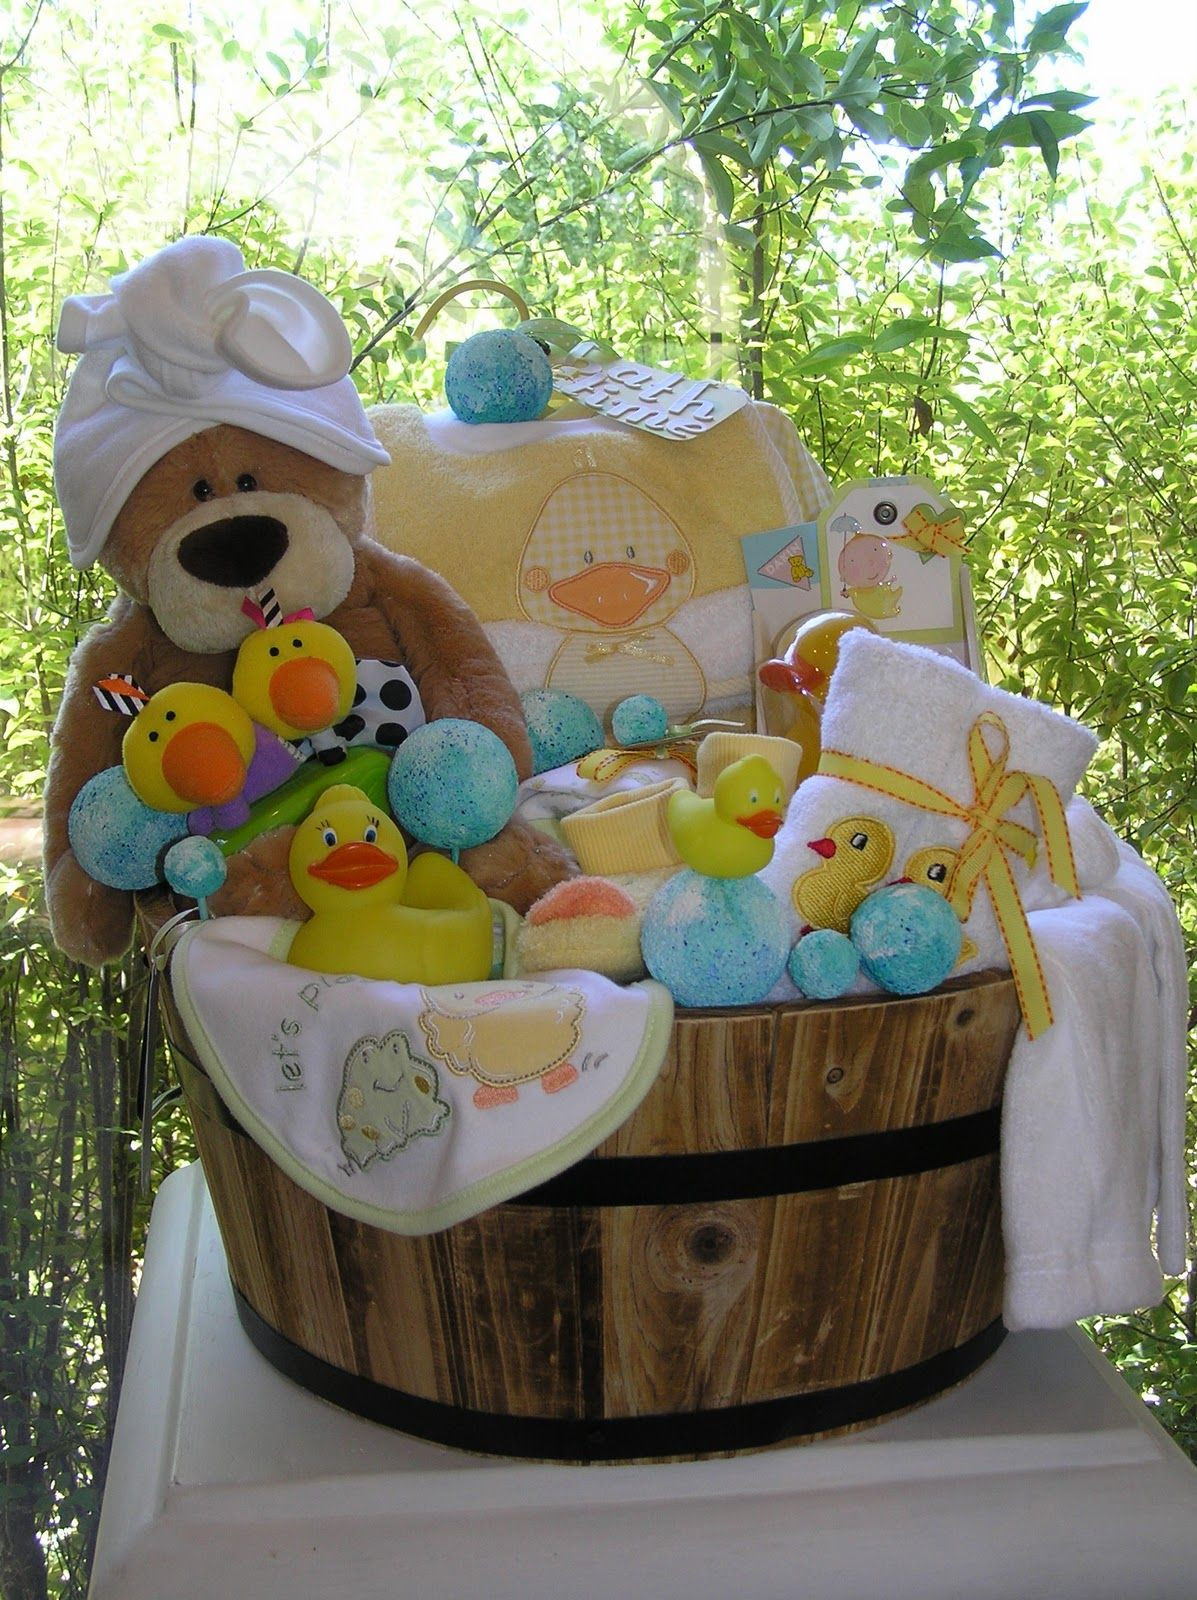 Gift Ideas For A Newborn Baby Boy
 Baby Gift Baskets